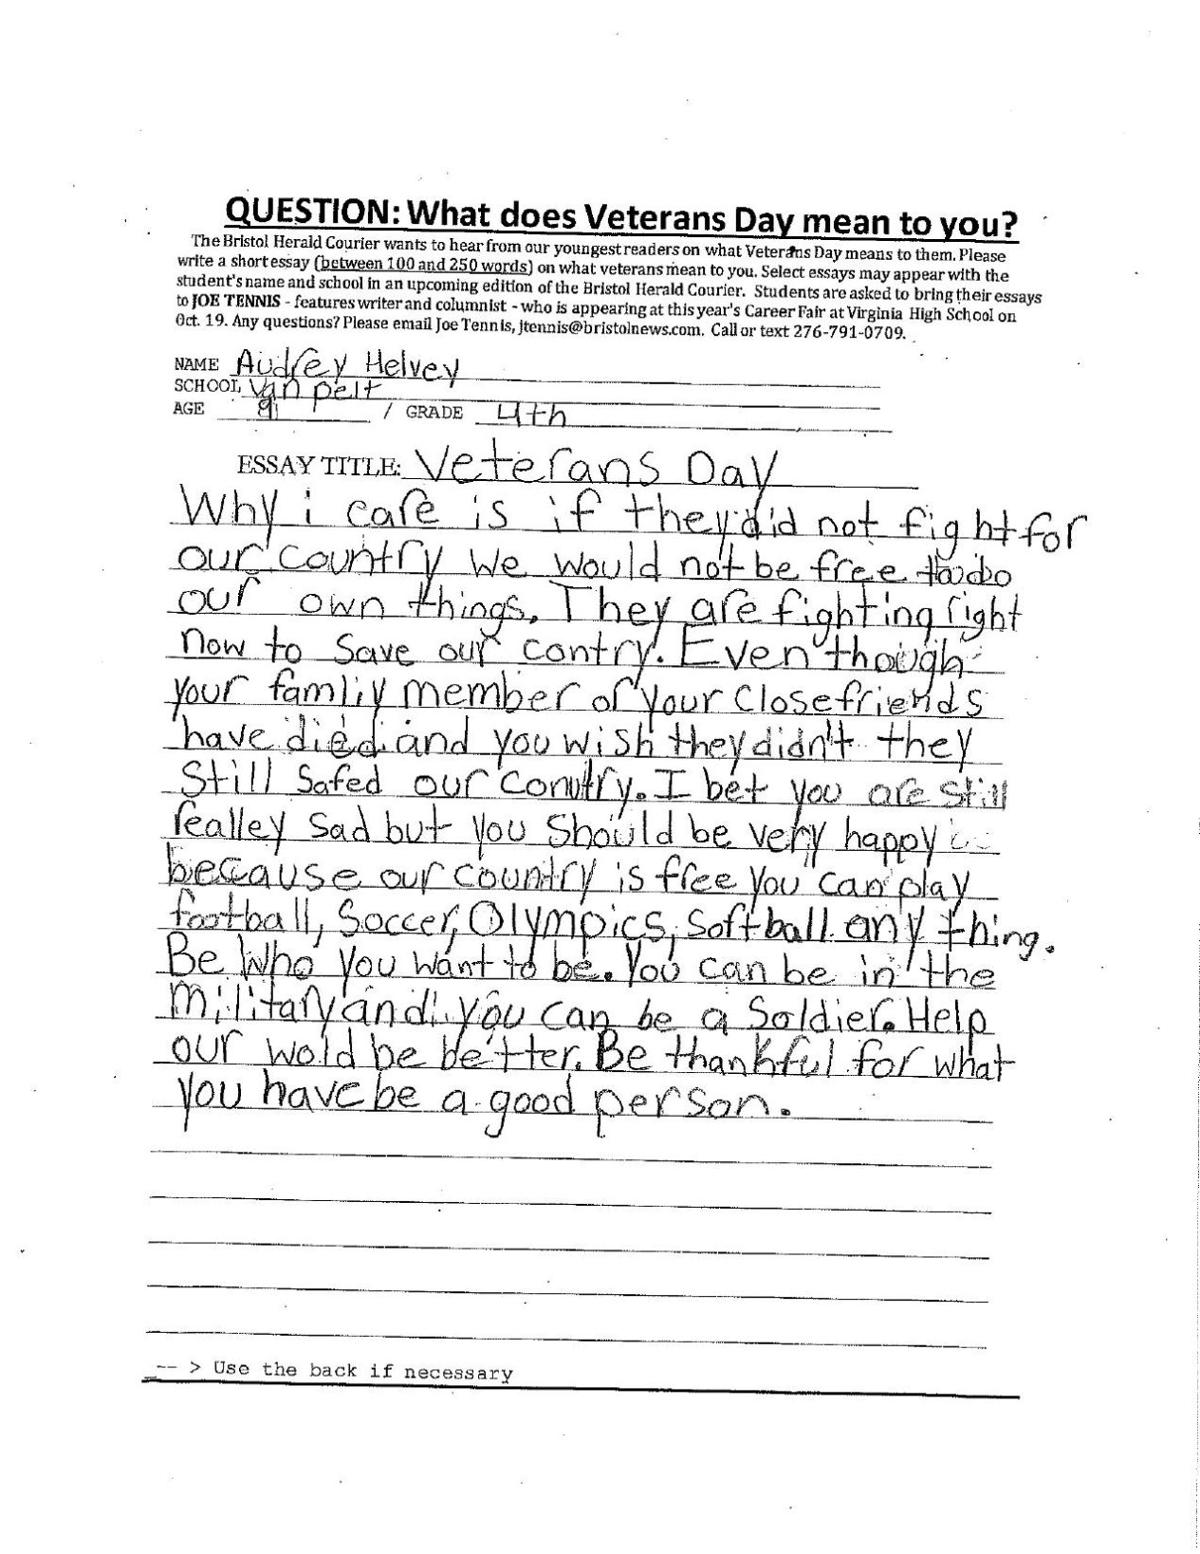 honor our veterans essay